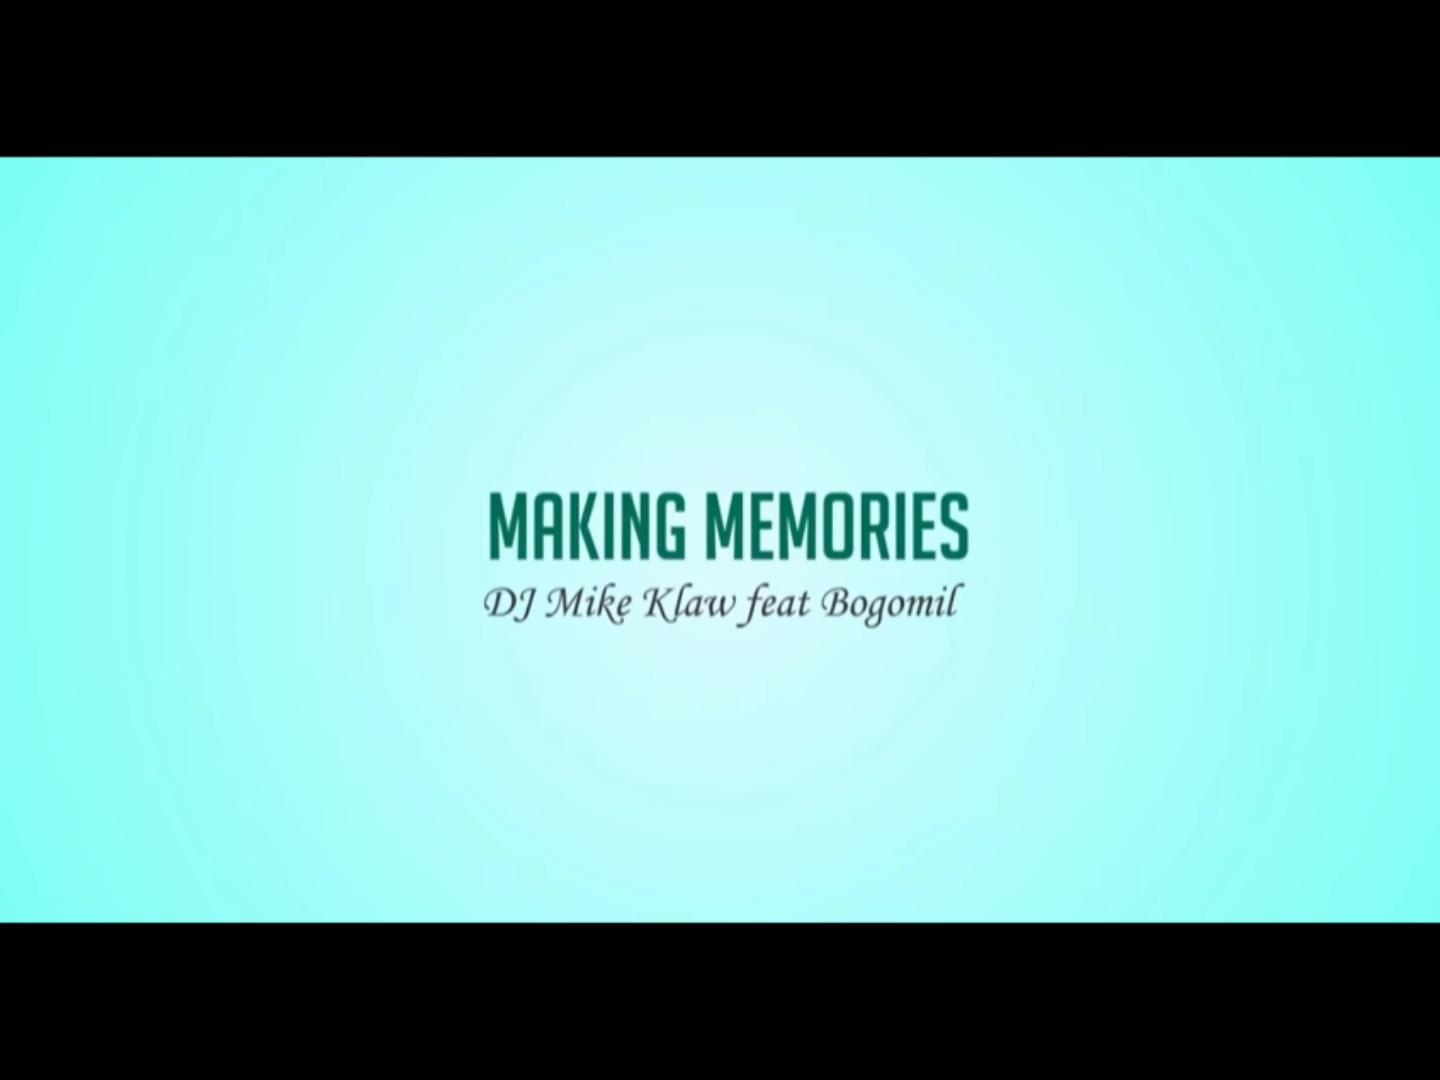  DJ Mike Klaw – “Making Memories” Feat. Bogomil